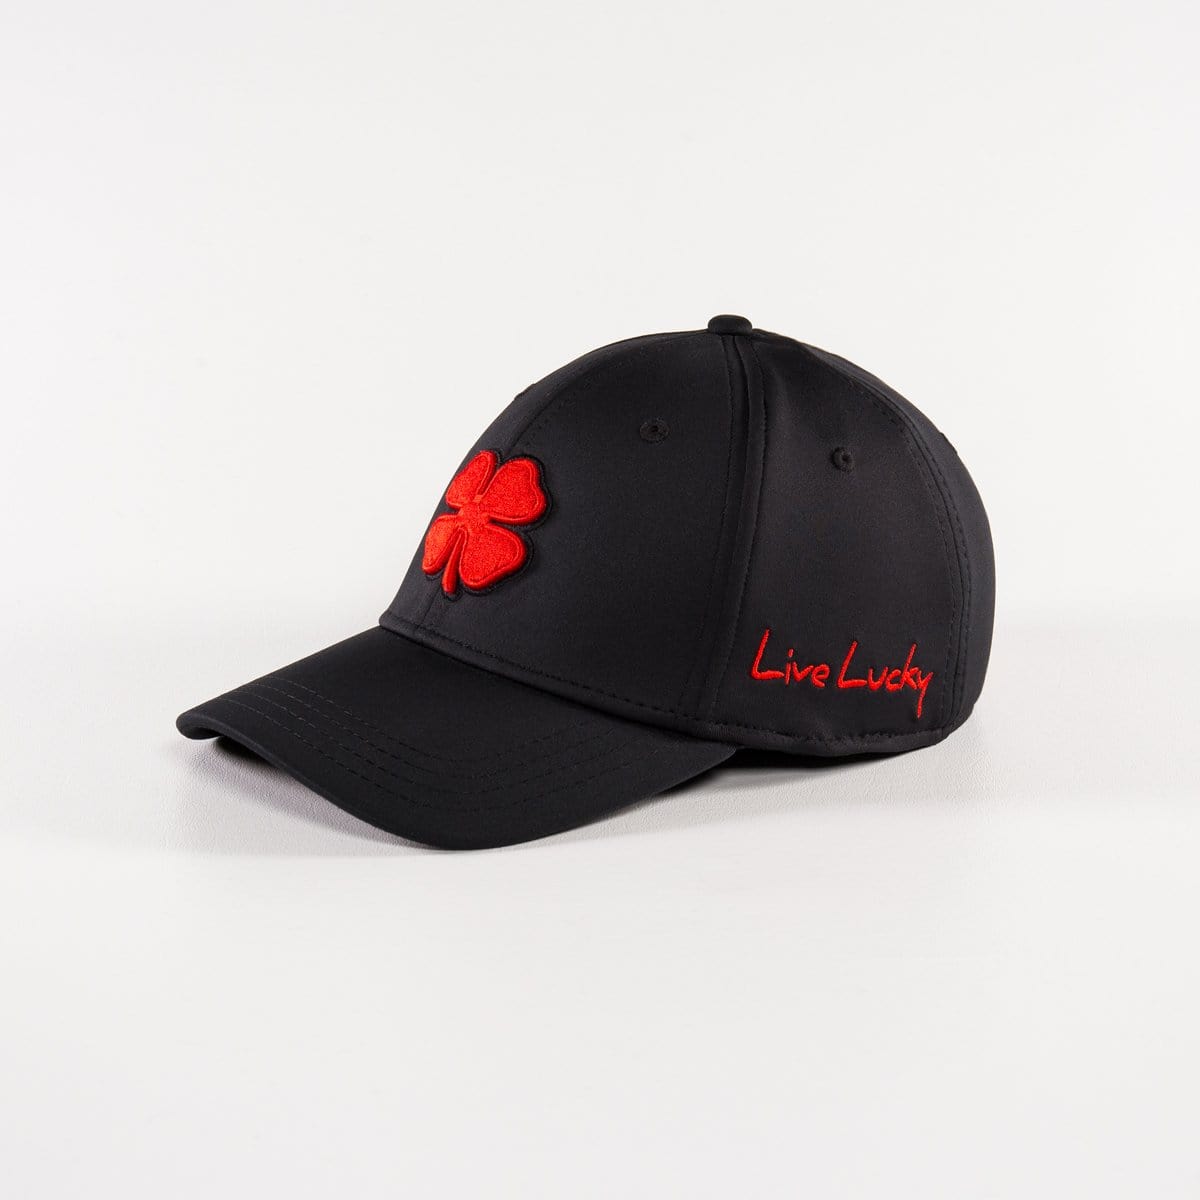 Gorra Black Clover  Live Lucky  PREMIUM CLOVER 24 Hat Cap